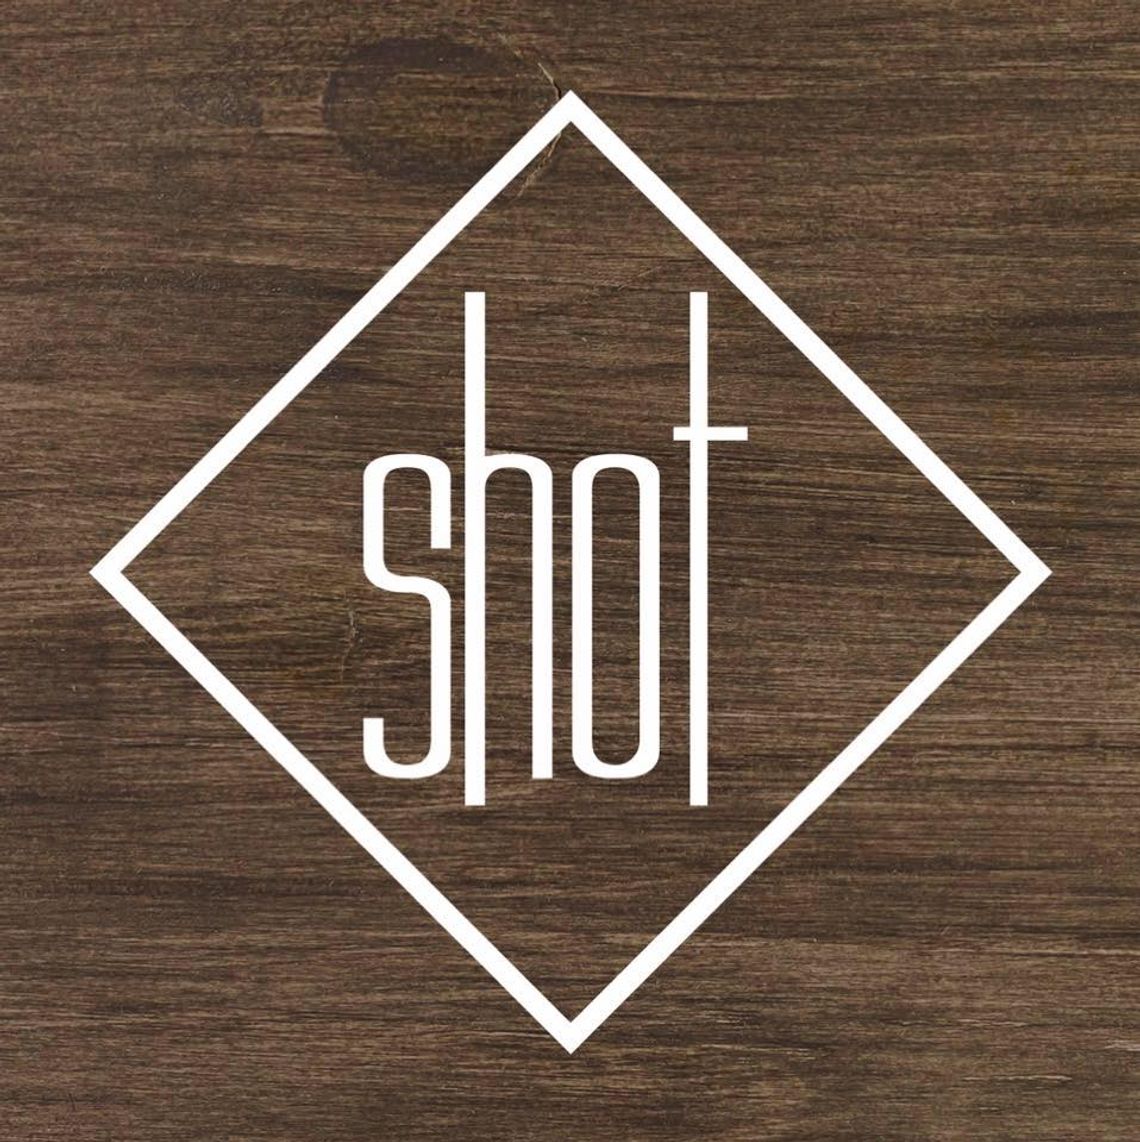 Shot Pub